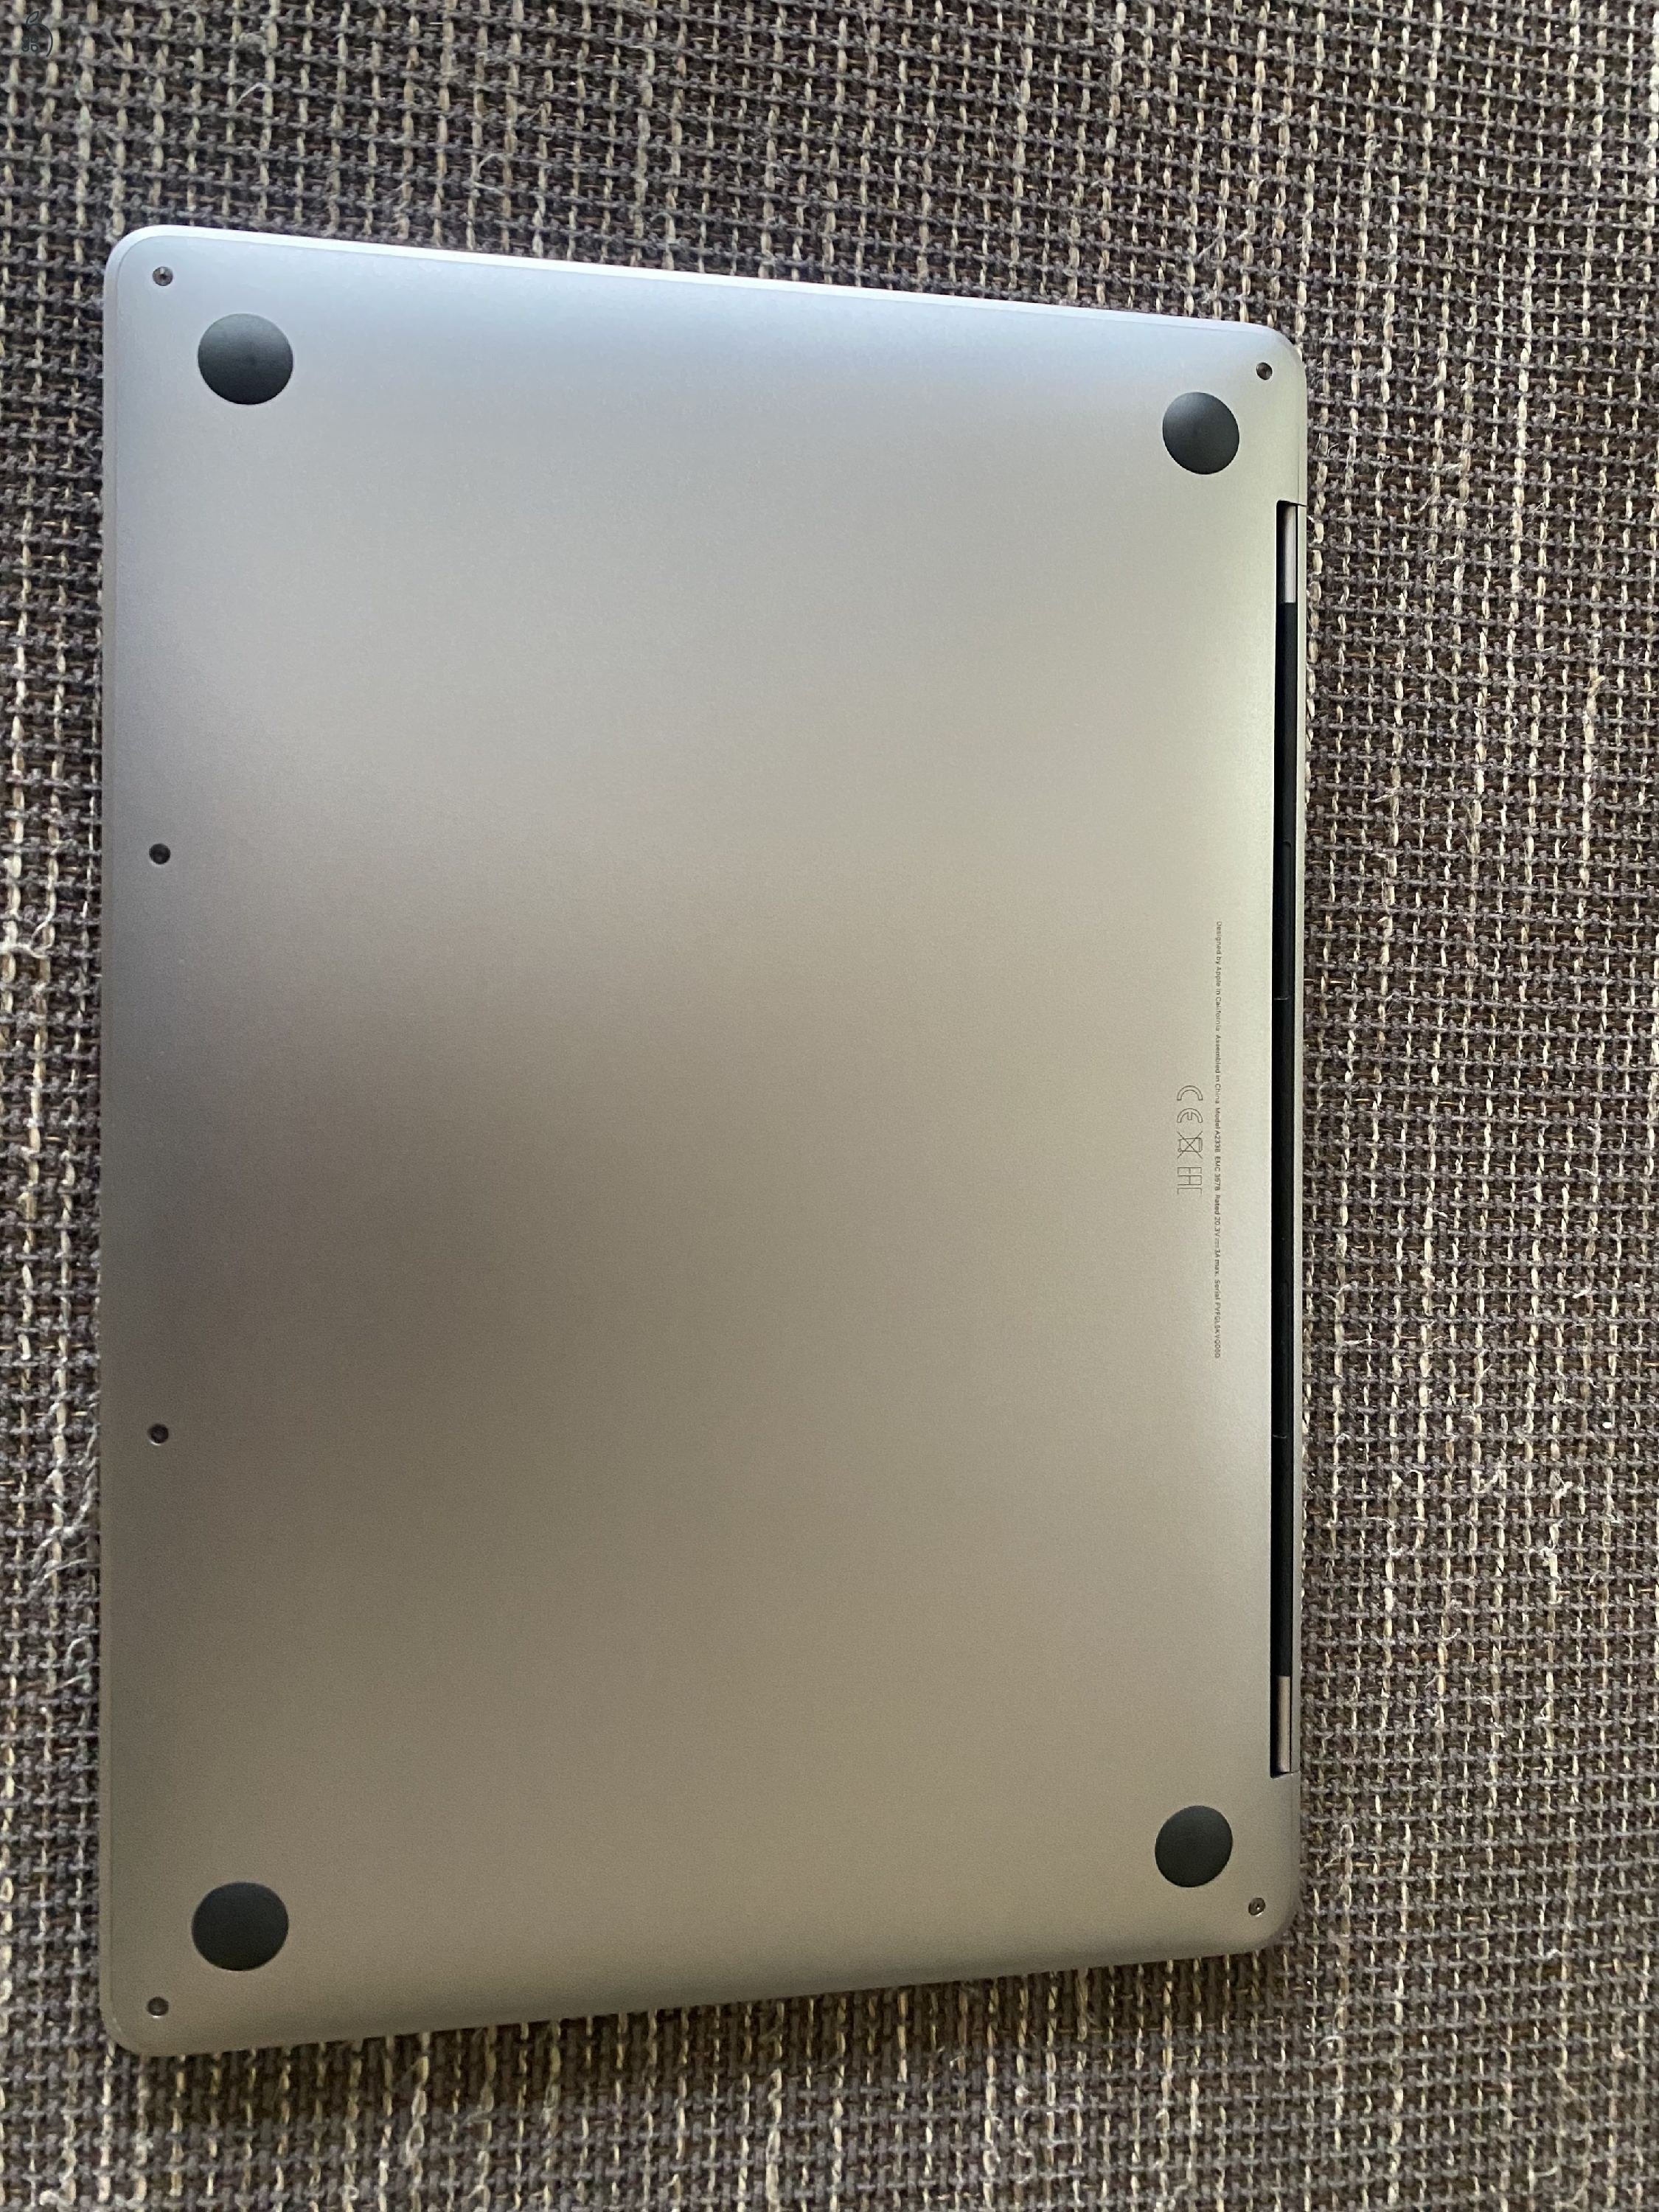 Eladó Macbook Pro M1 - 8GB 256SSD - Space Gray